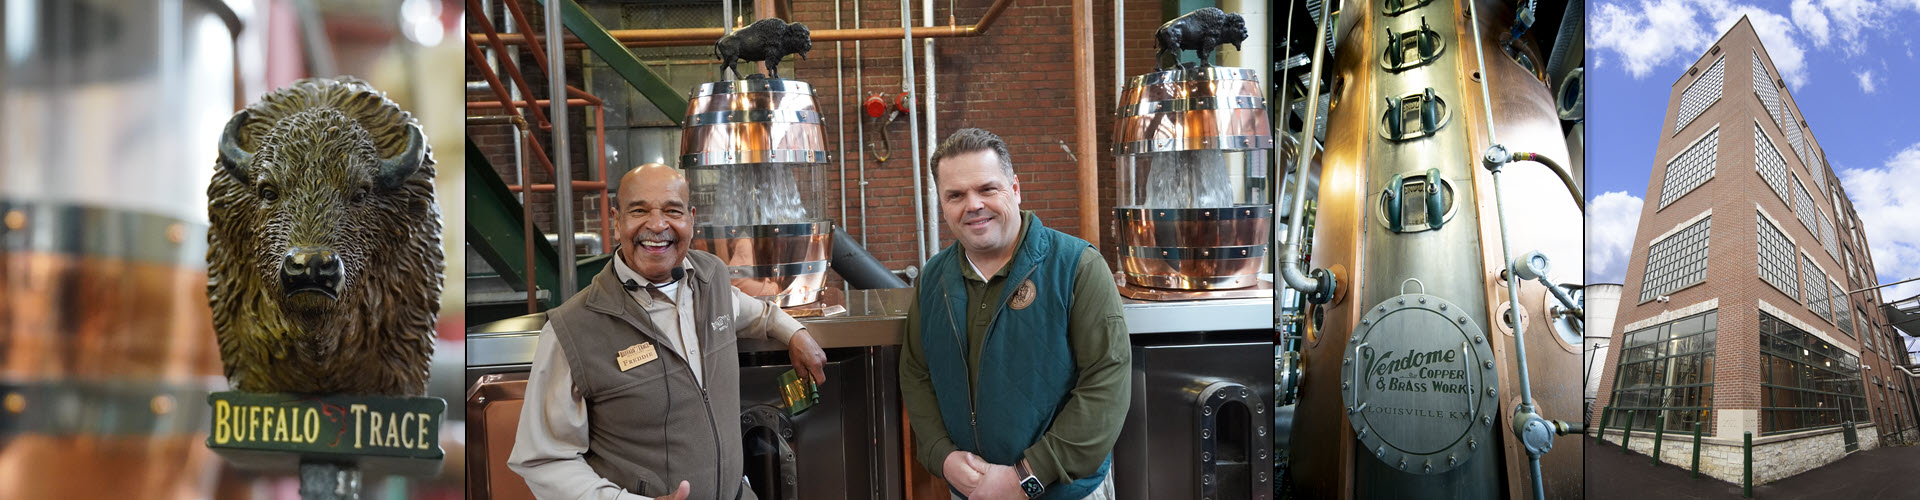 Buffalo Trace Distillery - VIP Visitor Lead Freddie Johnson and Master Distiller Harlen Wheatley